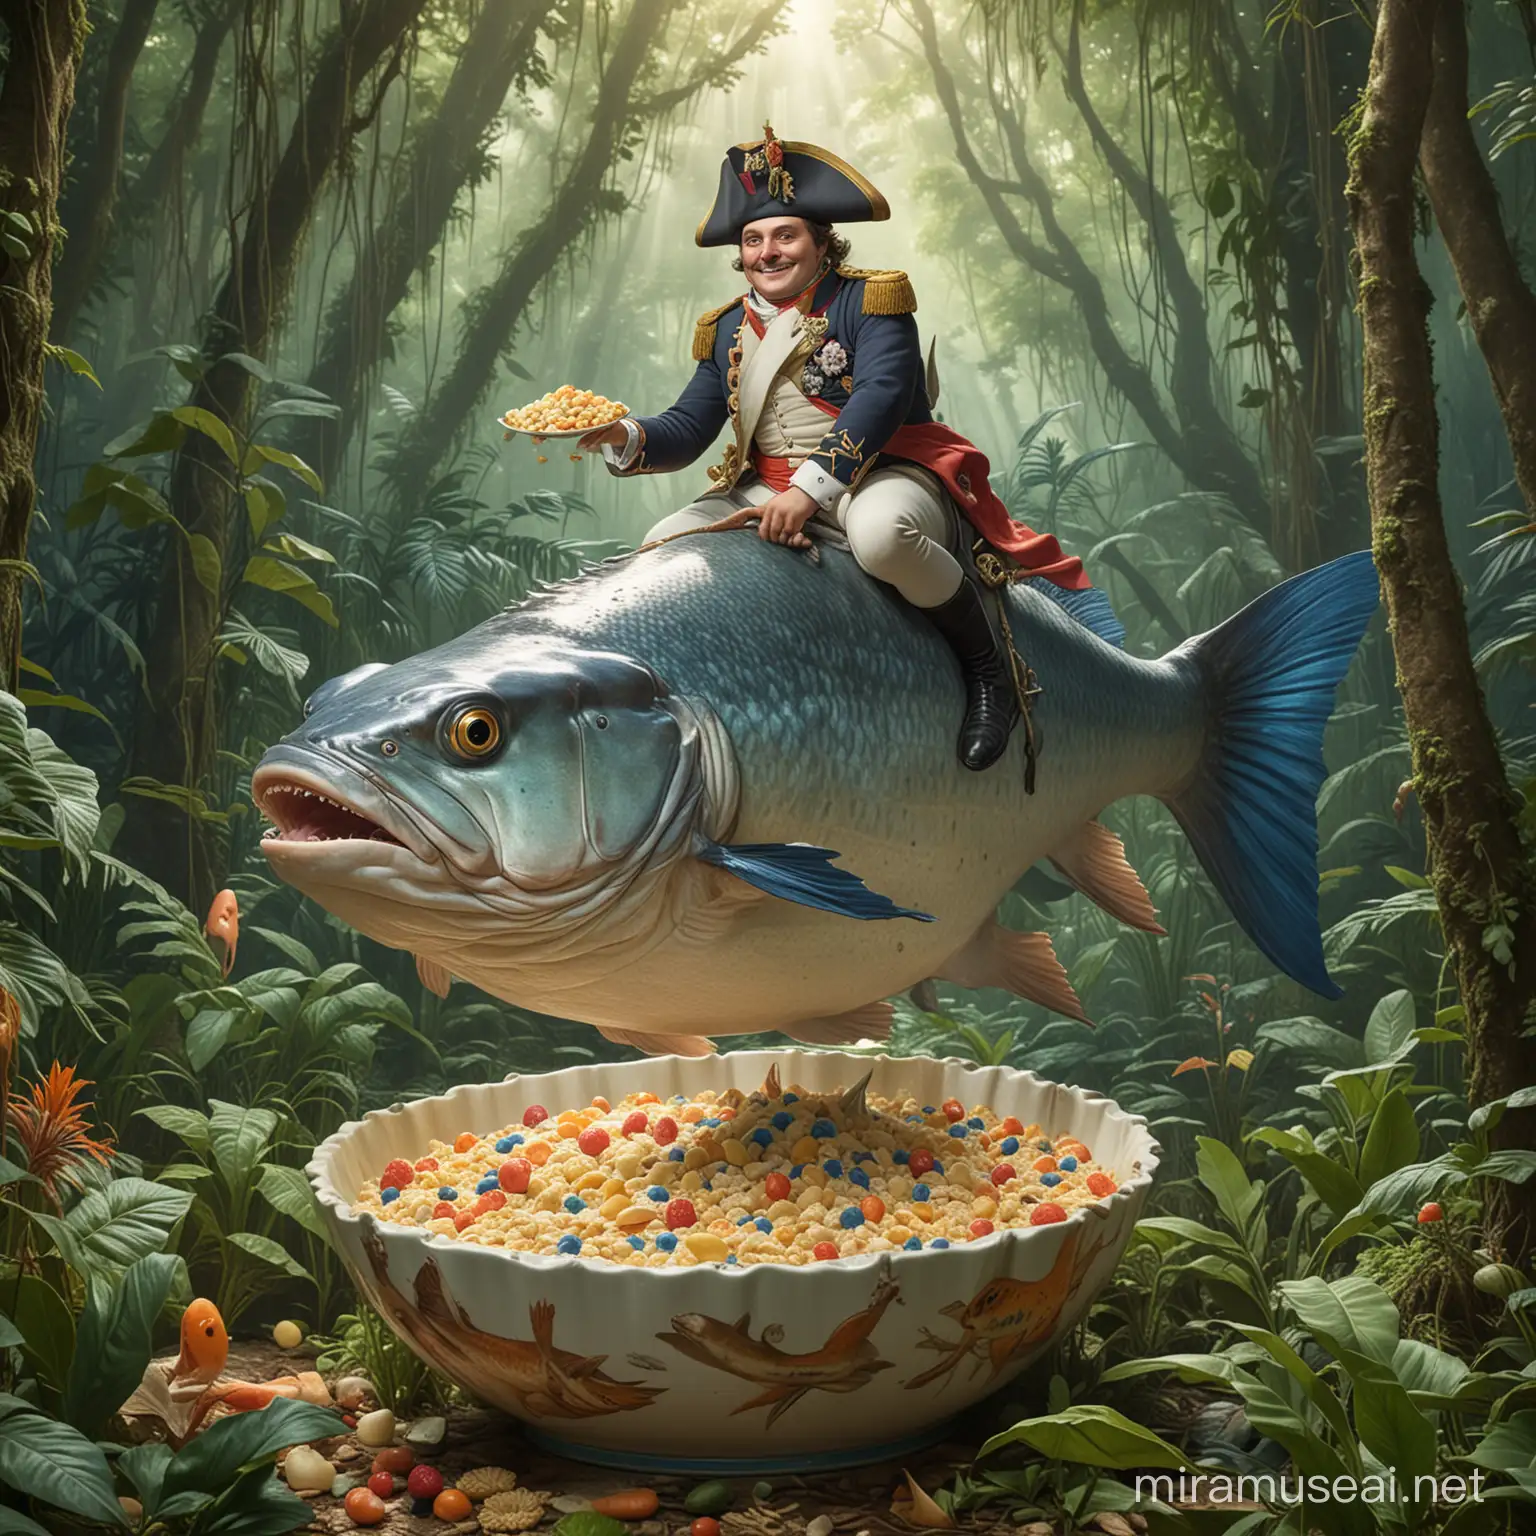 Joyful Napoleon Riding Giant Fish through Jungle with Unique Cereal Bowl